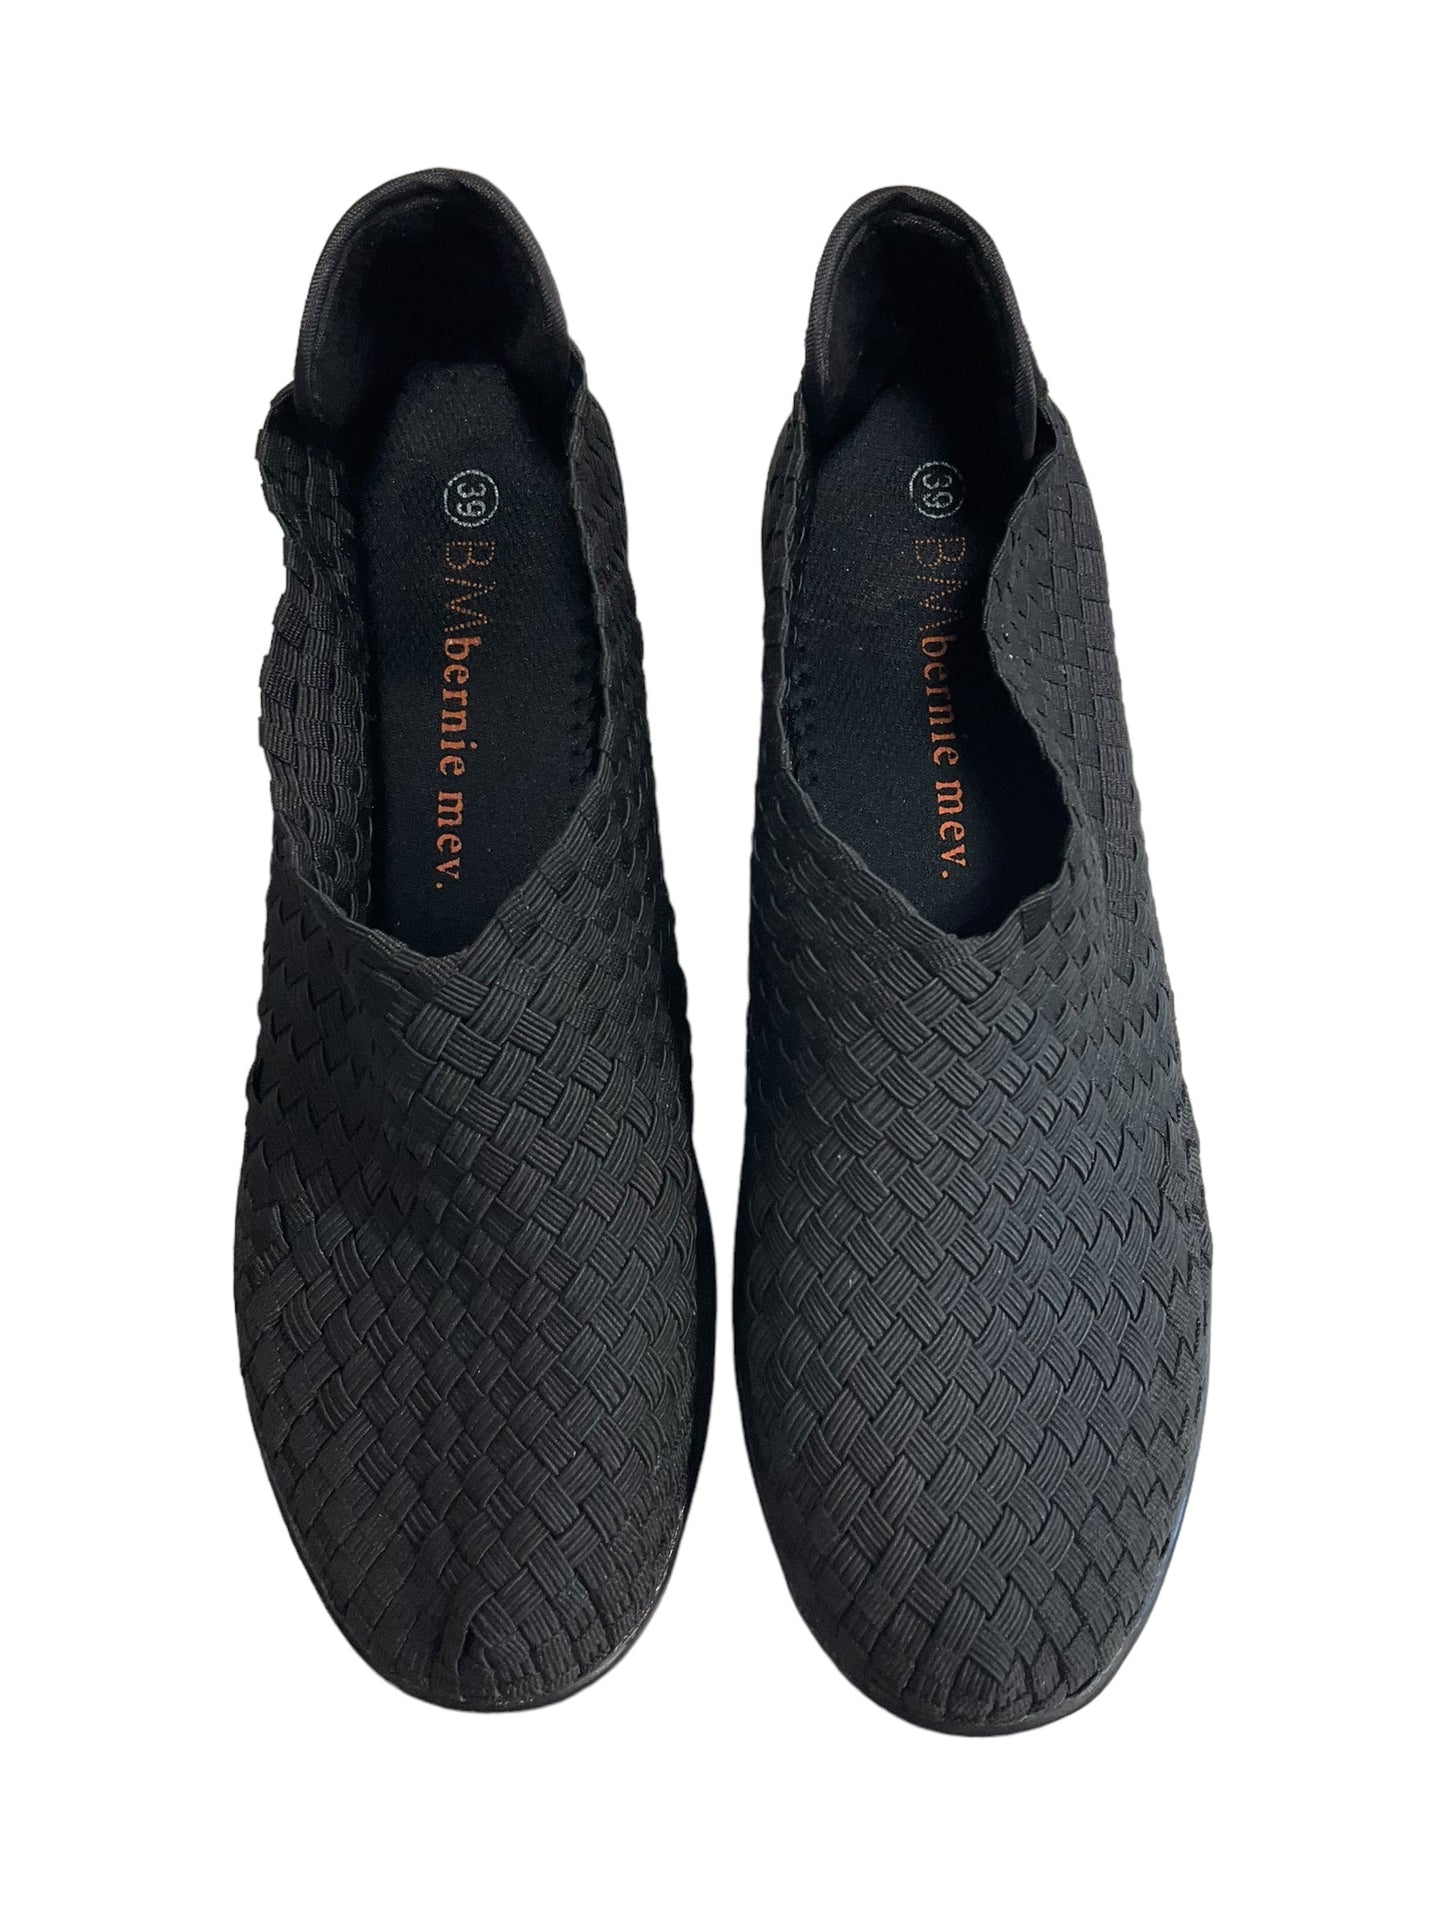 Black Shoes Heels Block Bernie Mev, Size 8.5